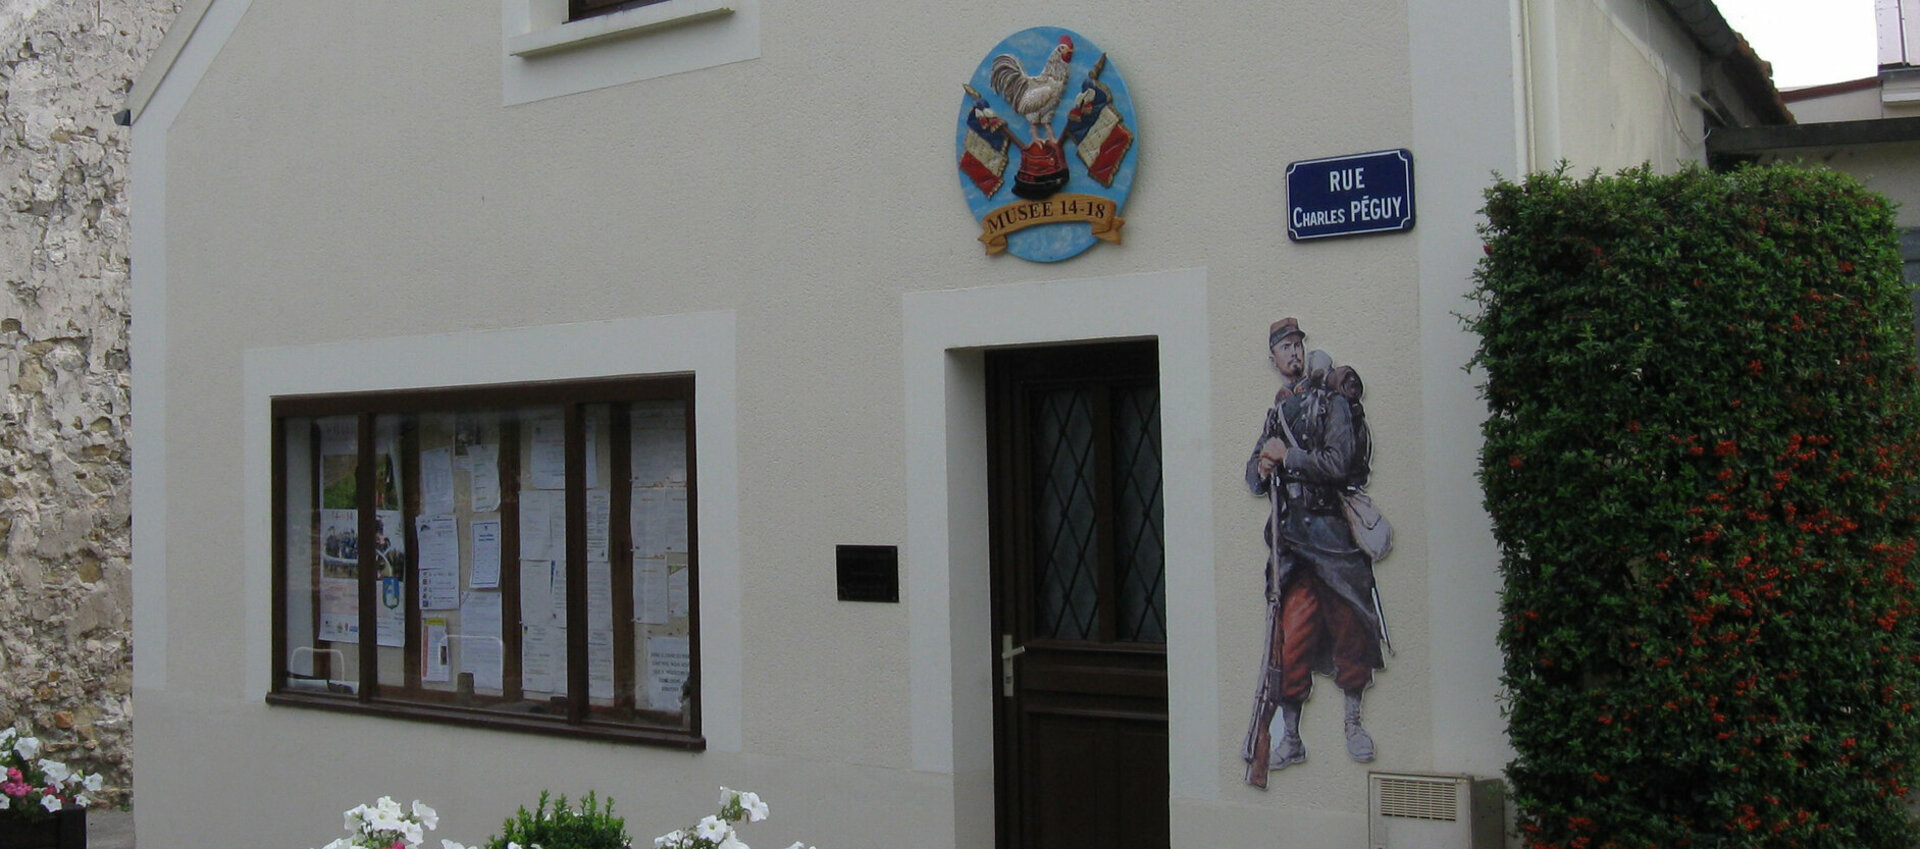 Mairie de Villeroy en Seine et Marne